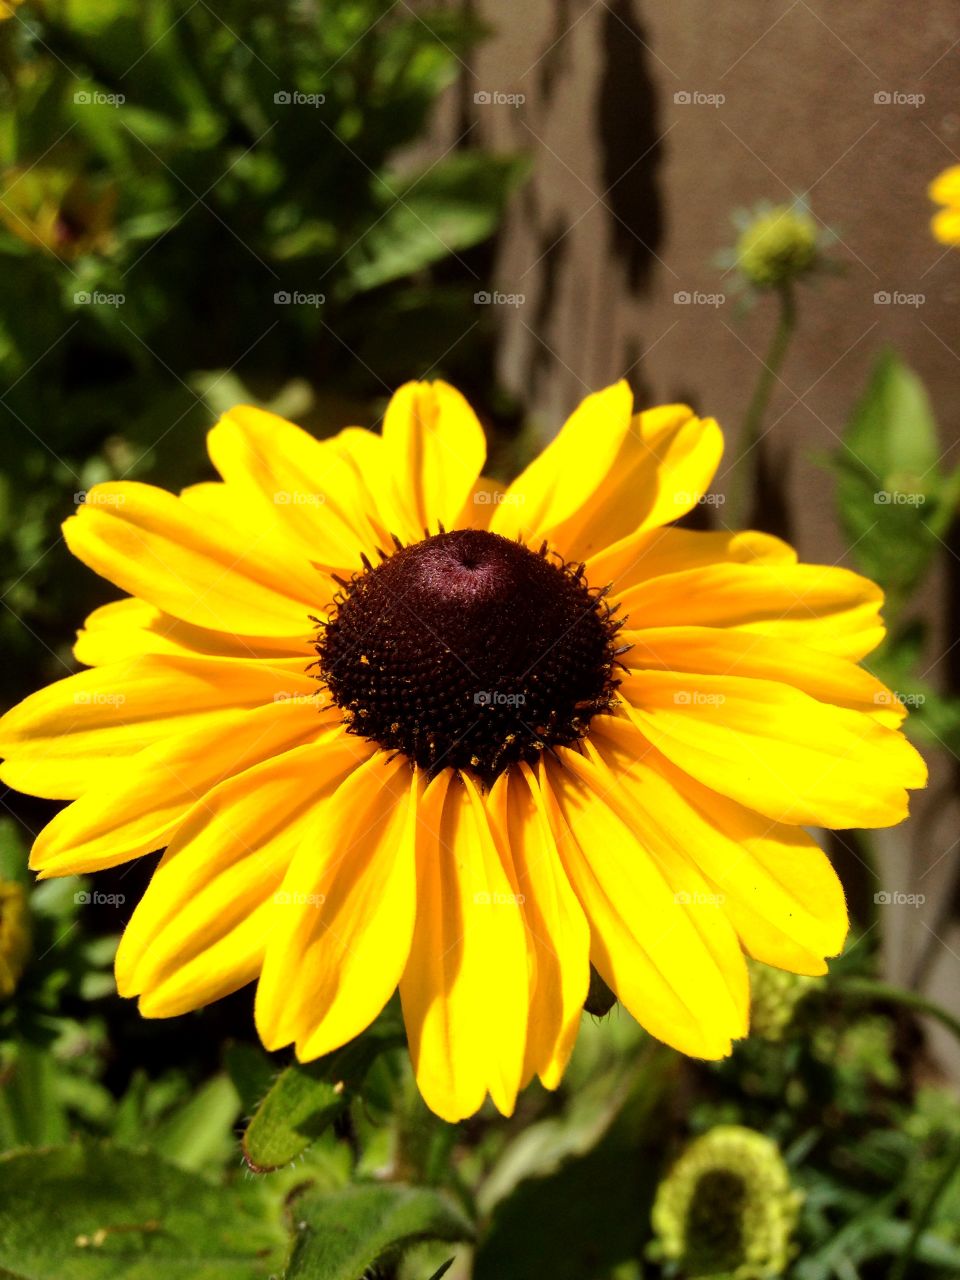 Flower of the sun